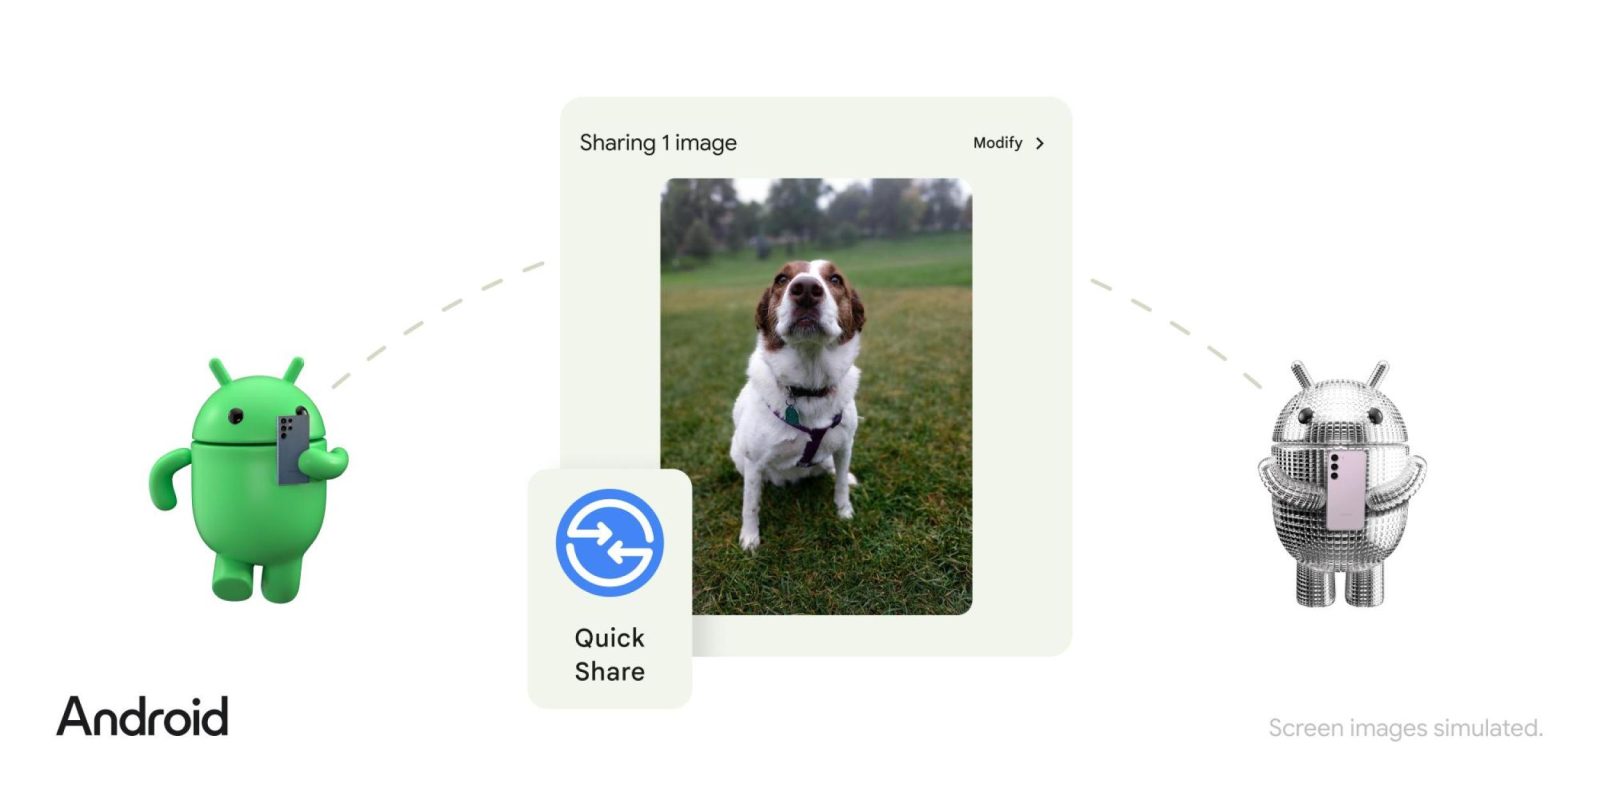 Near Share en Android y portátiles se convierte en “Quick Share”